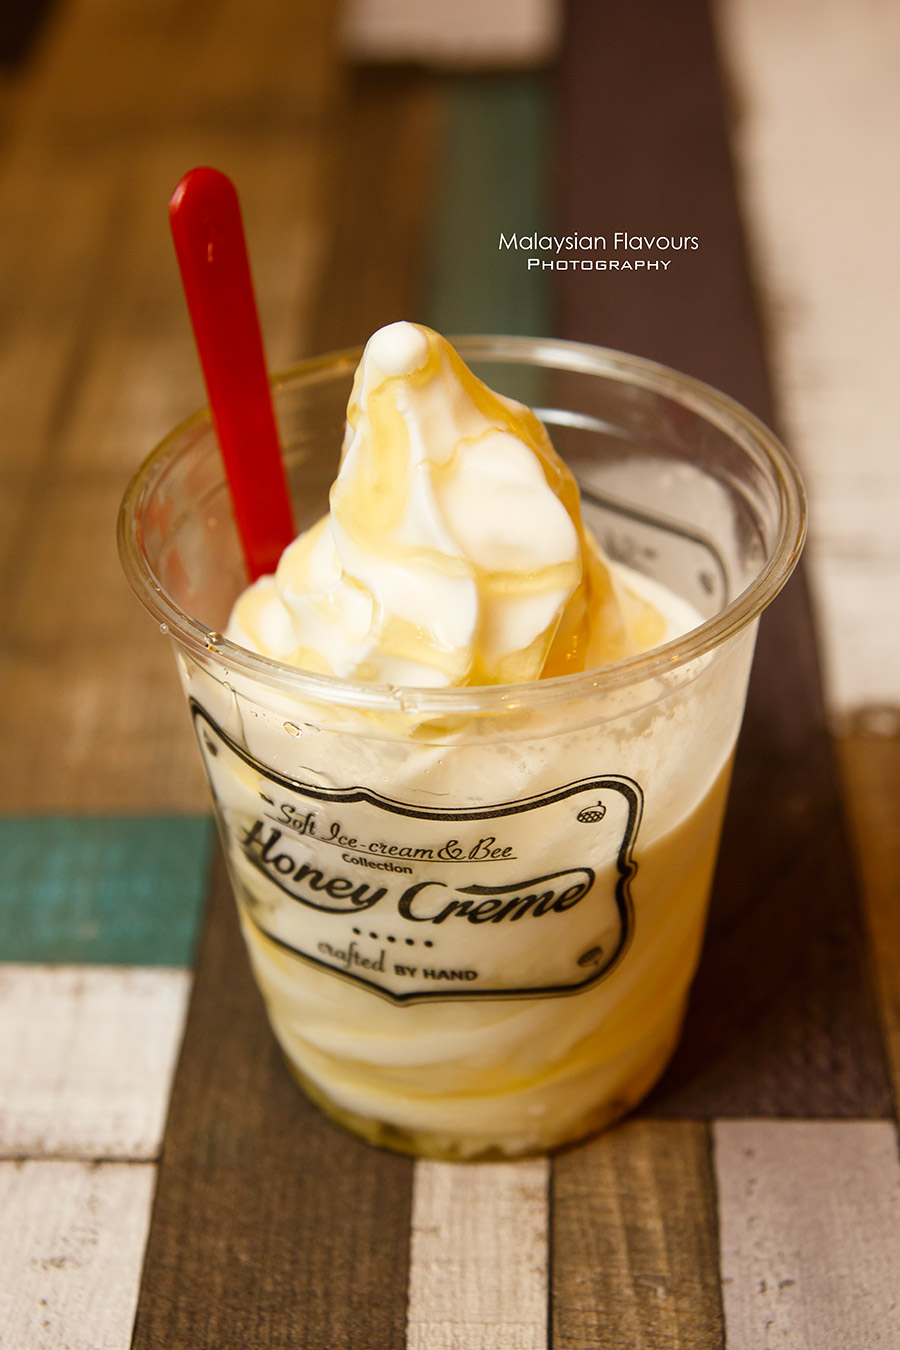 honey-creme-soft-serve-ice-cream-desa-sri-hartamas-kl